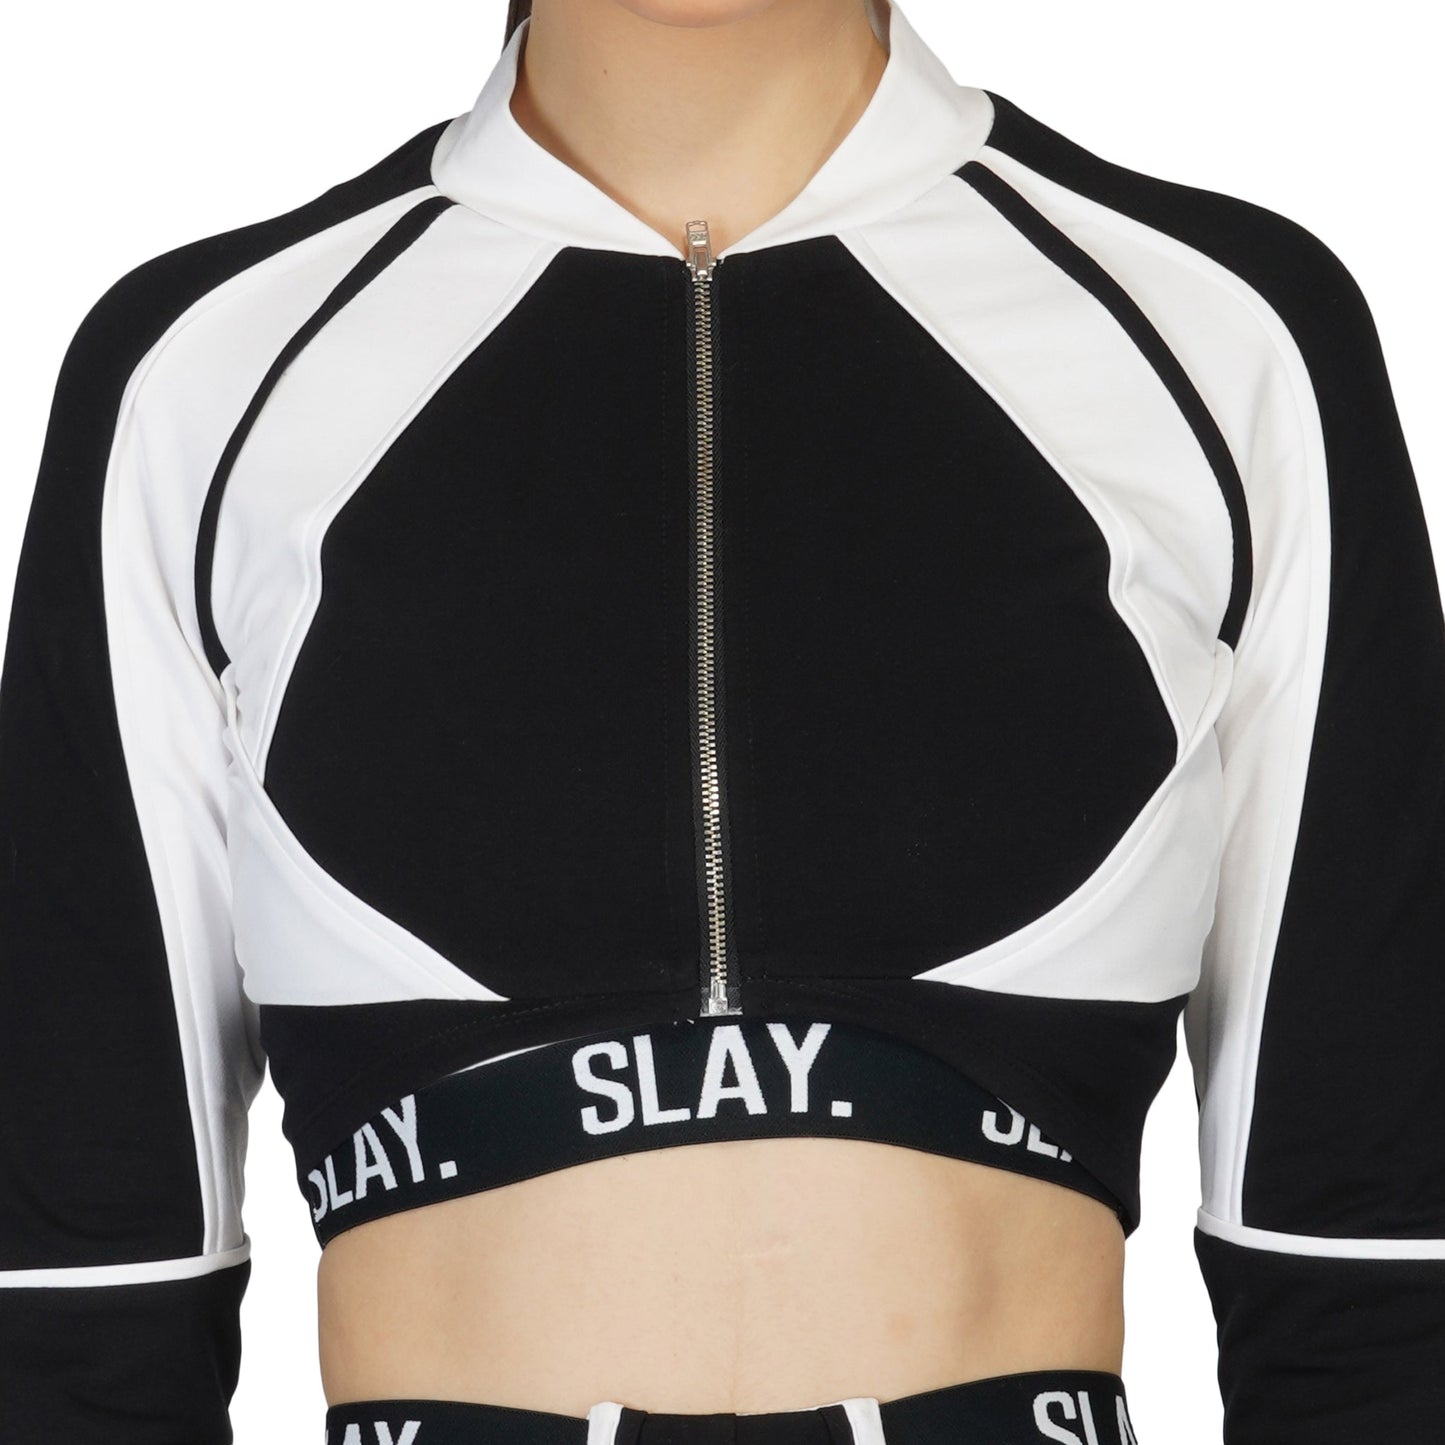 SLAY. Sport Women's Activewear Black & White Colorblock High Waist Cargo Jogger Pants Streetwear